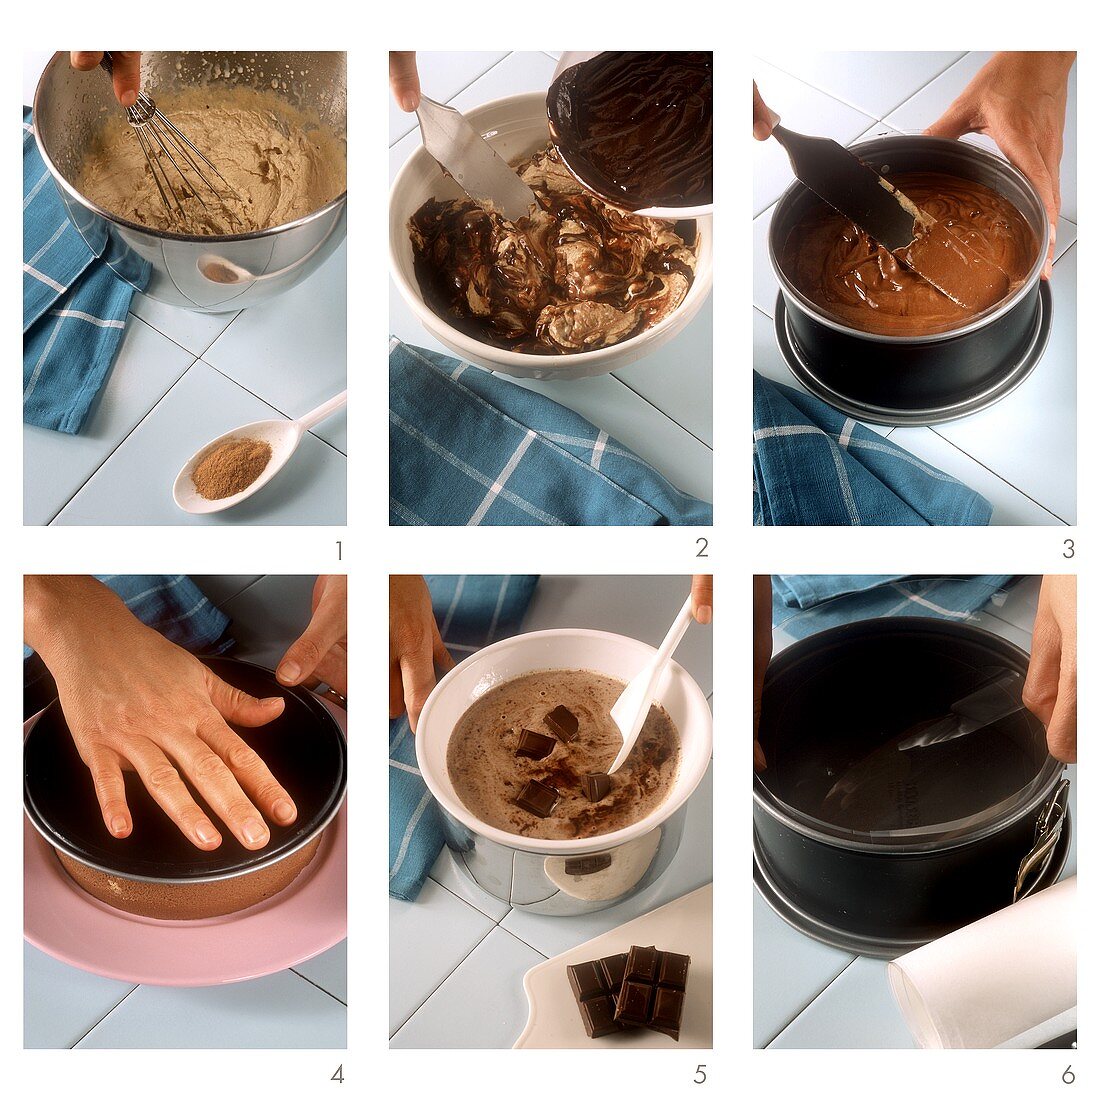 Making gâteau truffé au chocolat (chocolate truffle cake)